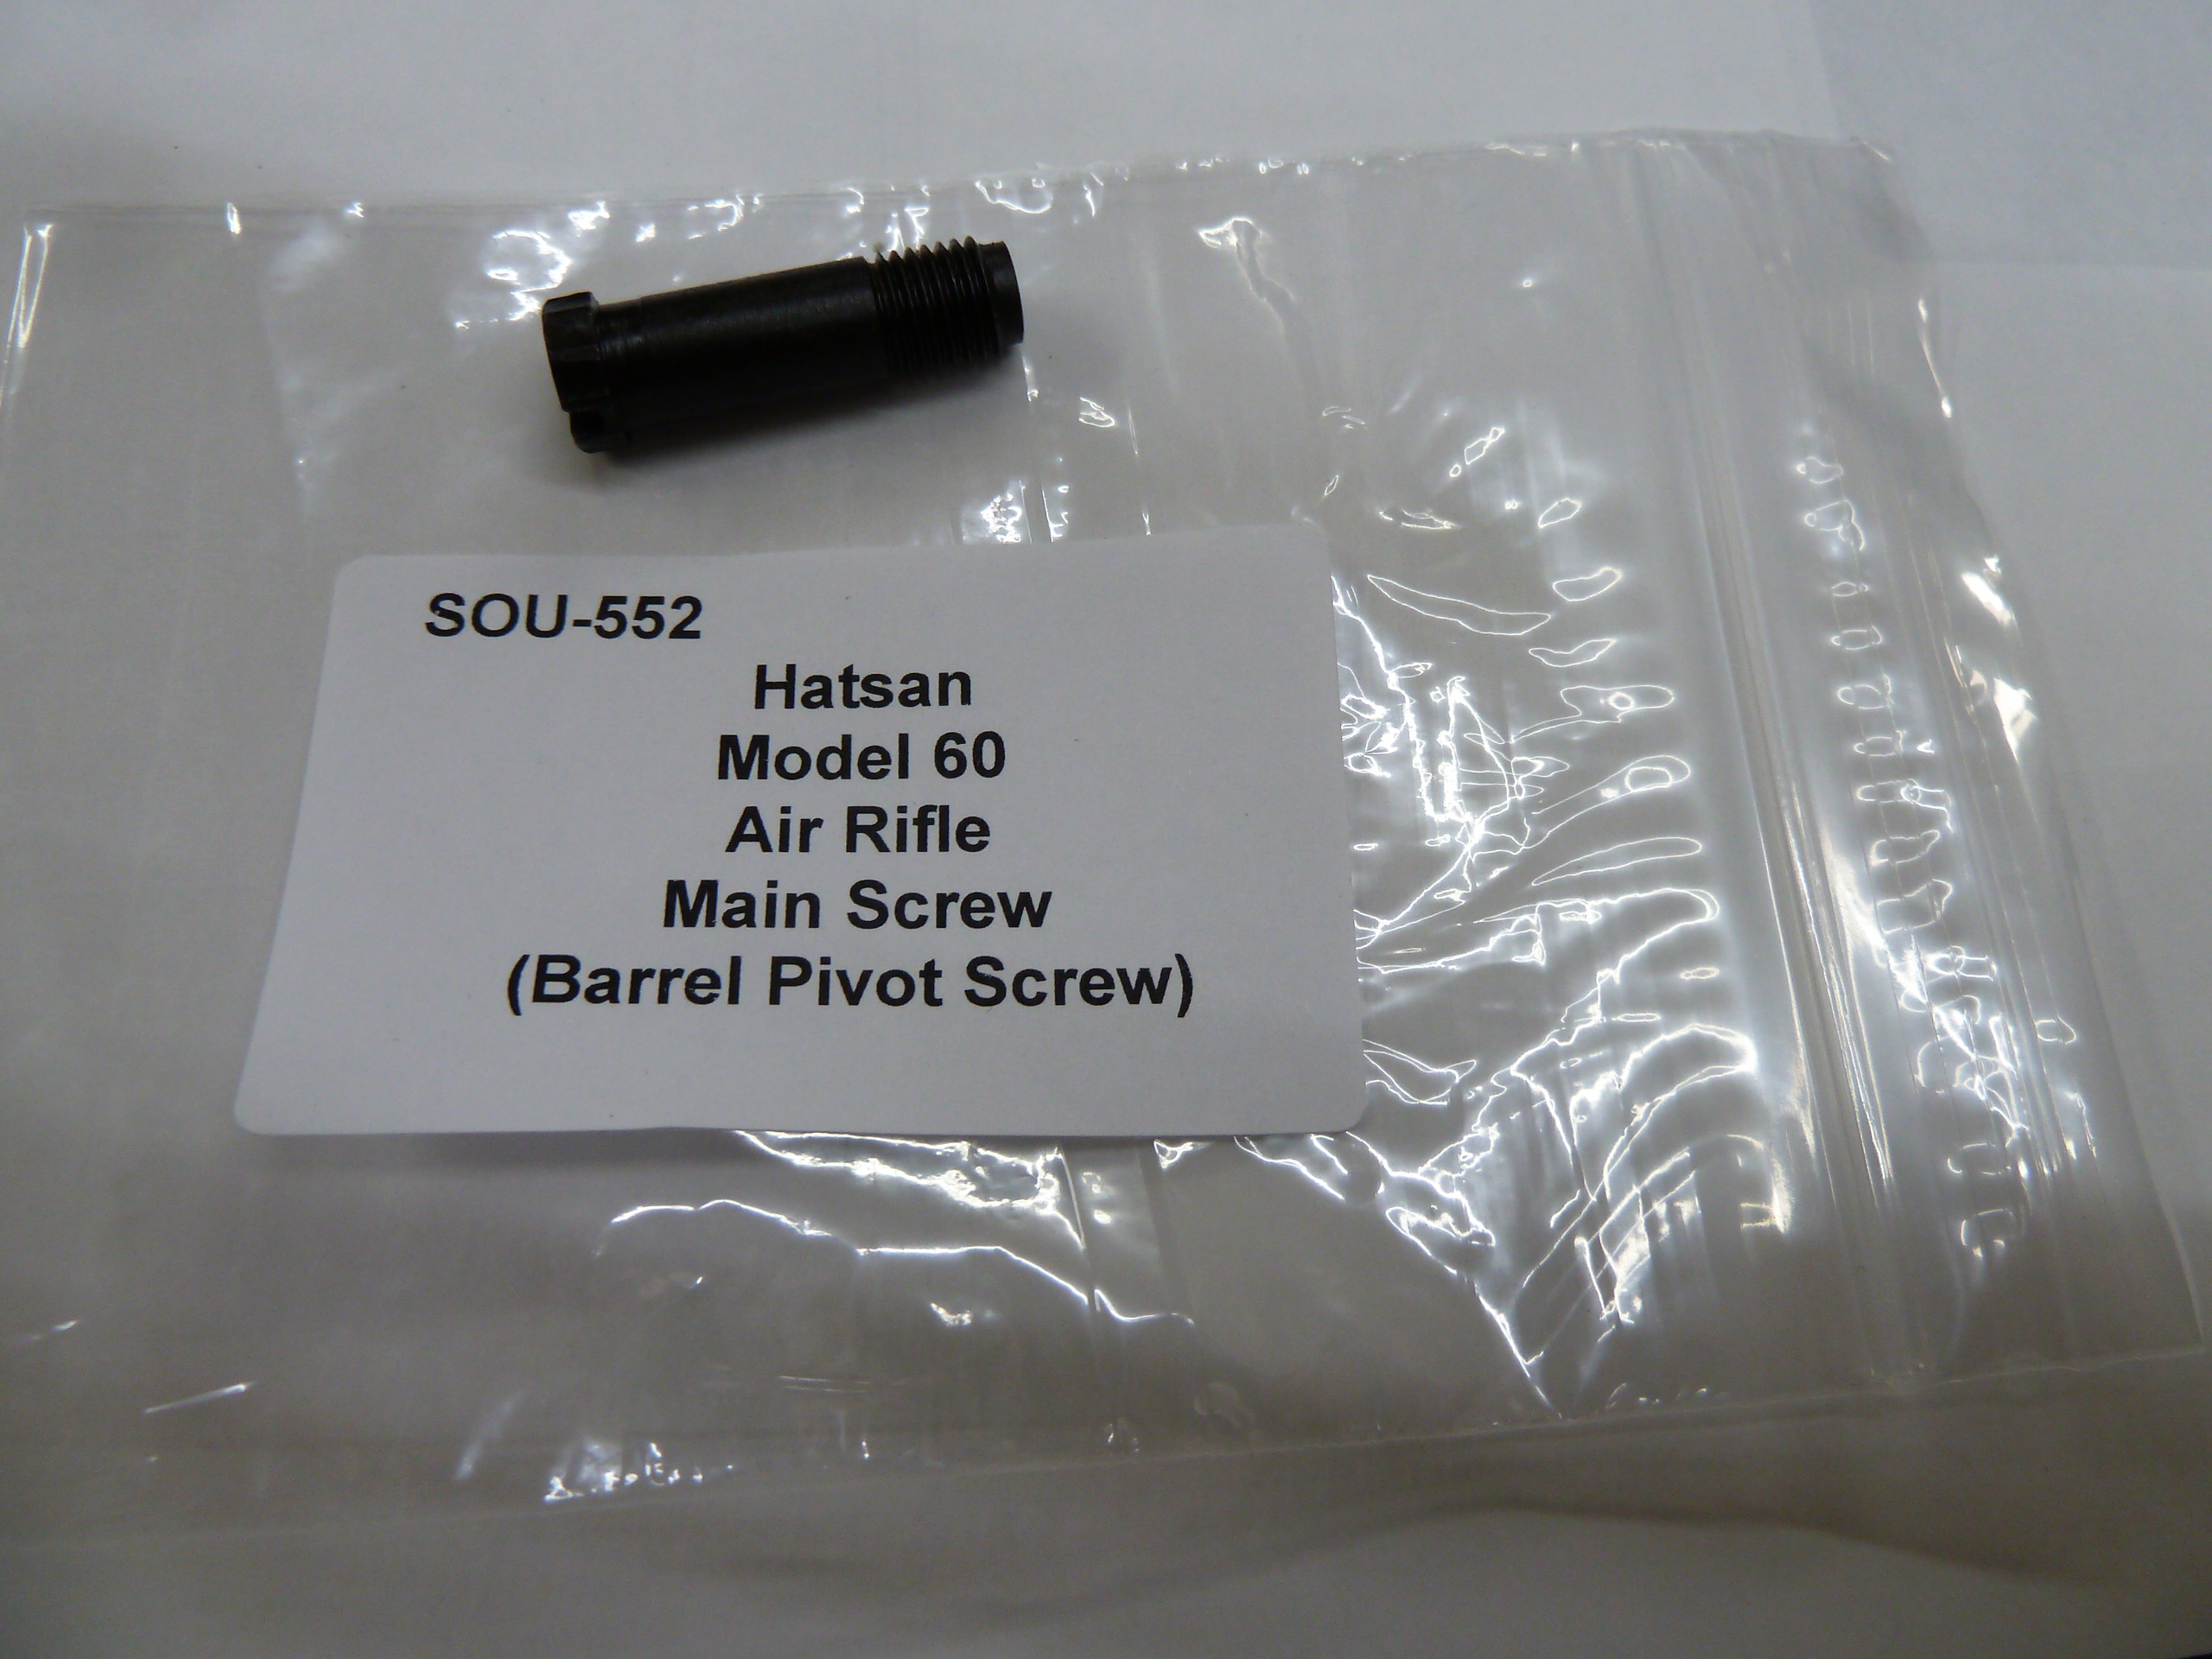 Hatsan Model 60 main screw